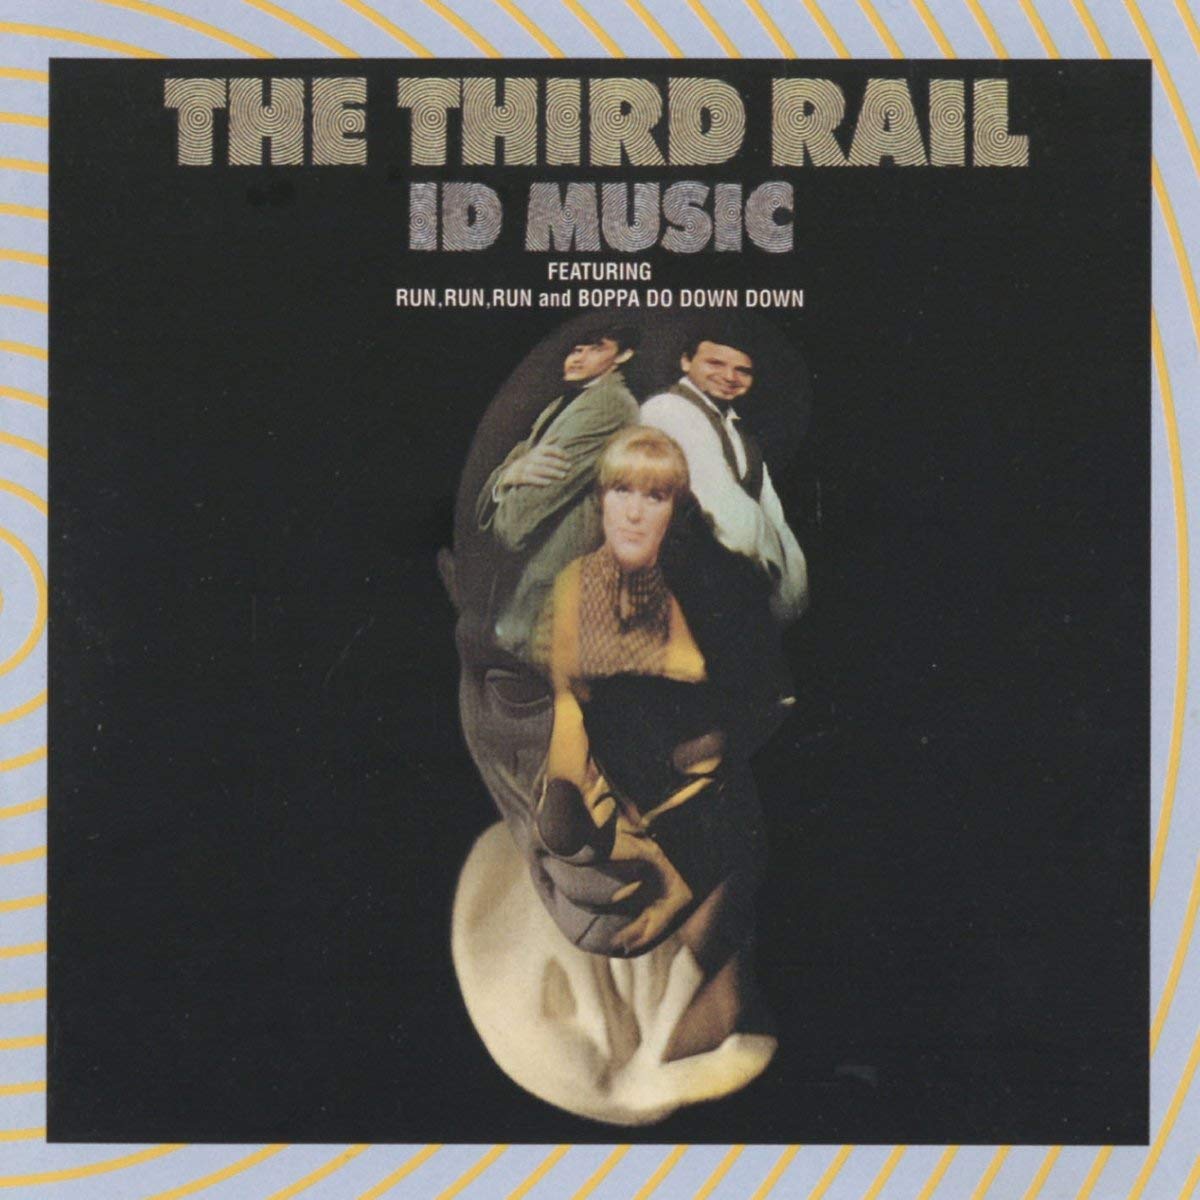 THIRD RAIL / サード・レール / ID MUSIC